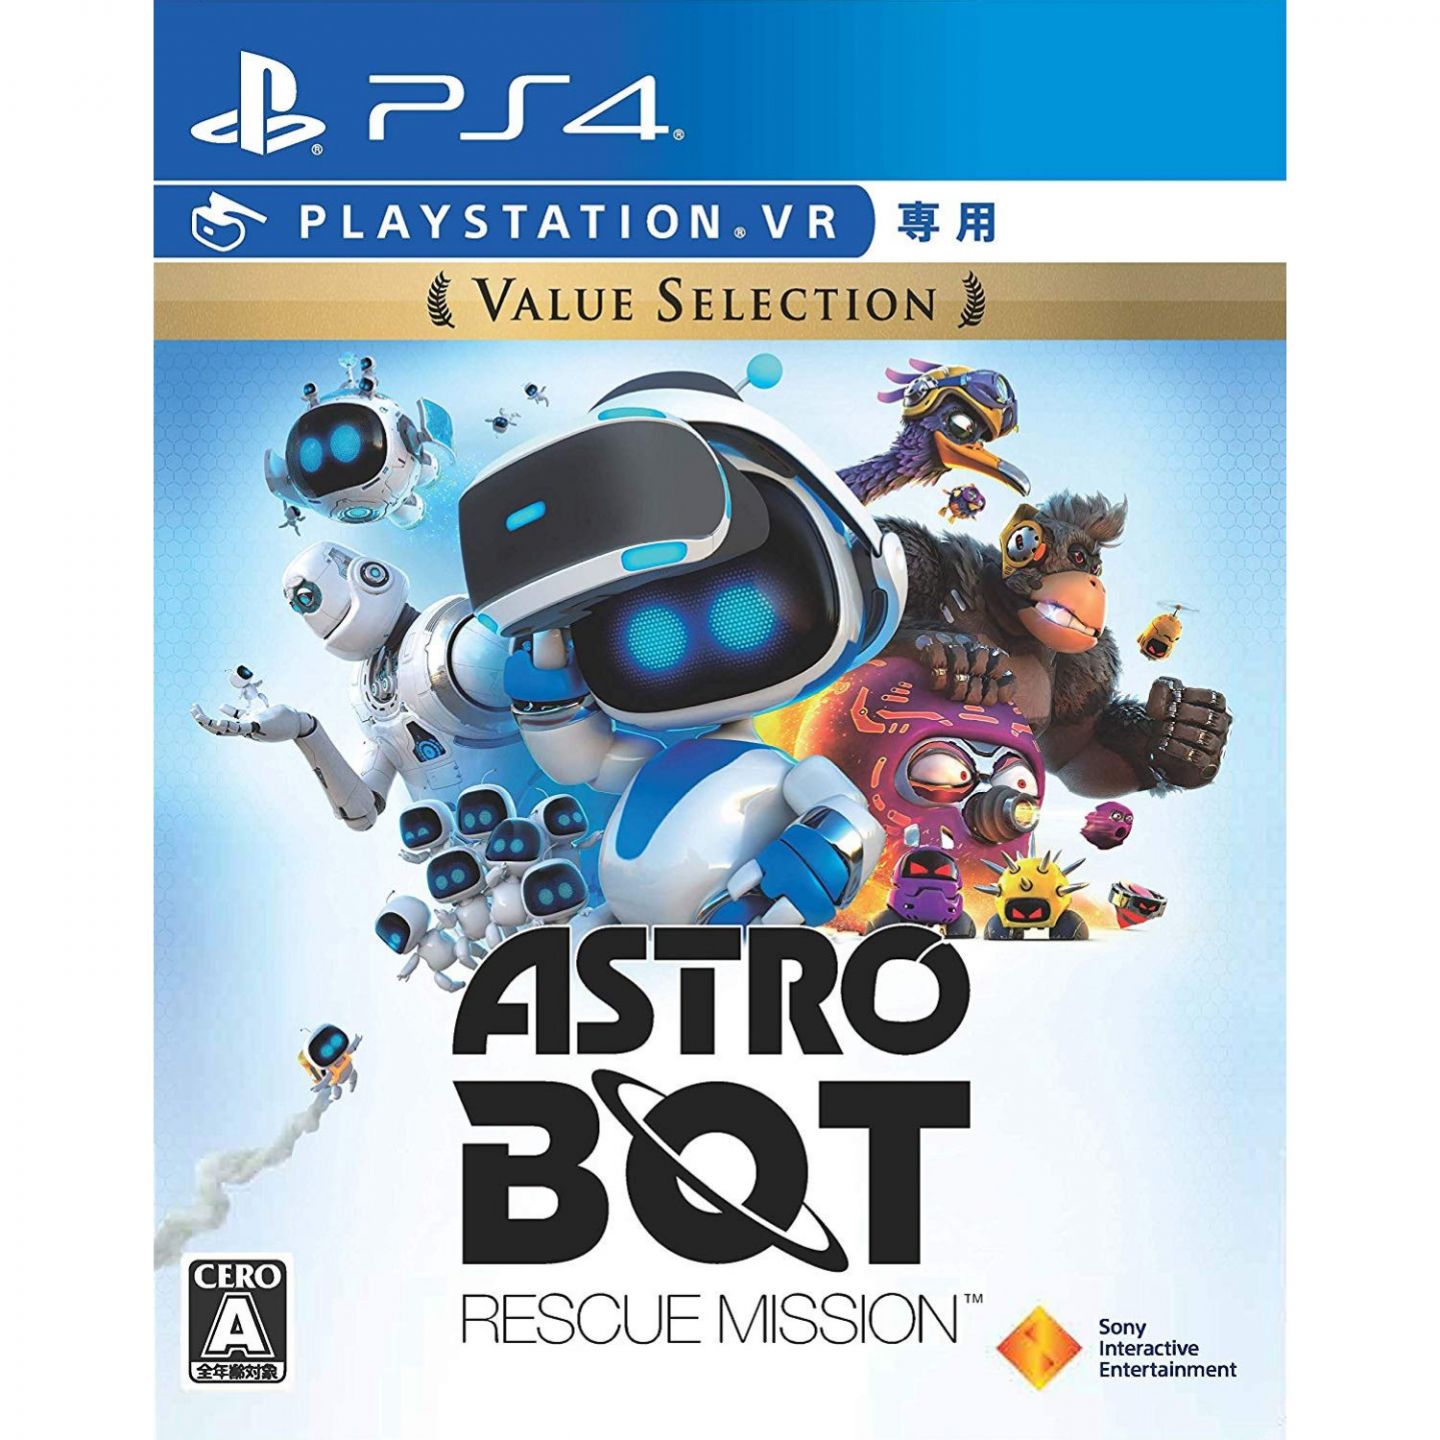 Astro Bot pode ganhar novo jogo; Sony registra marca